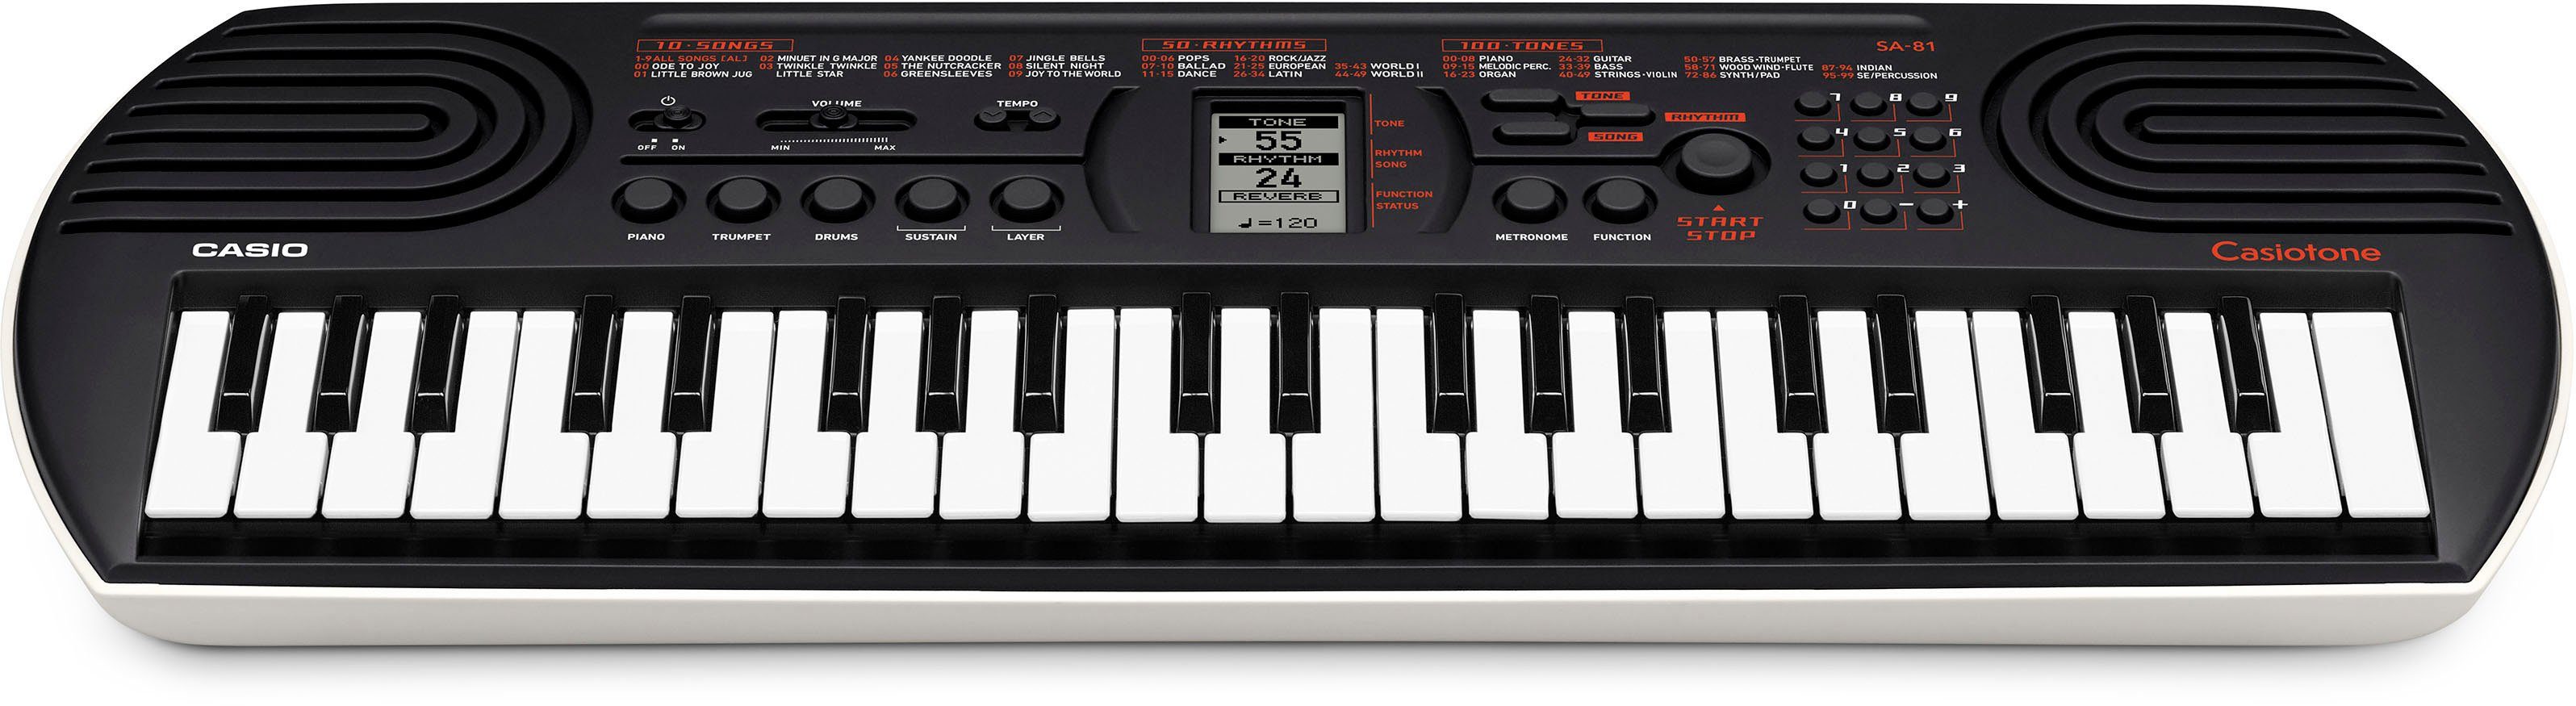 Tasten mit 44 Mini-Keyboard Home-Keyboard SA-81, CASIO